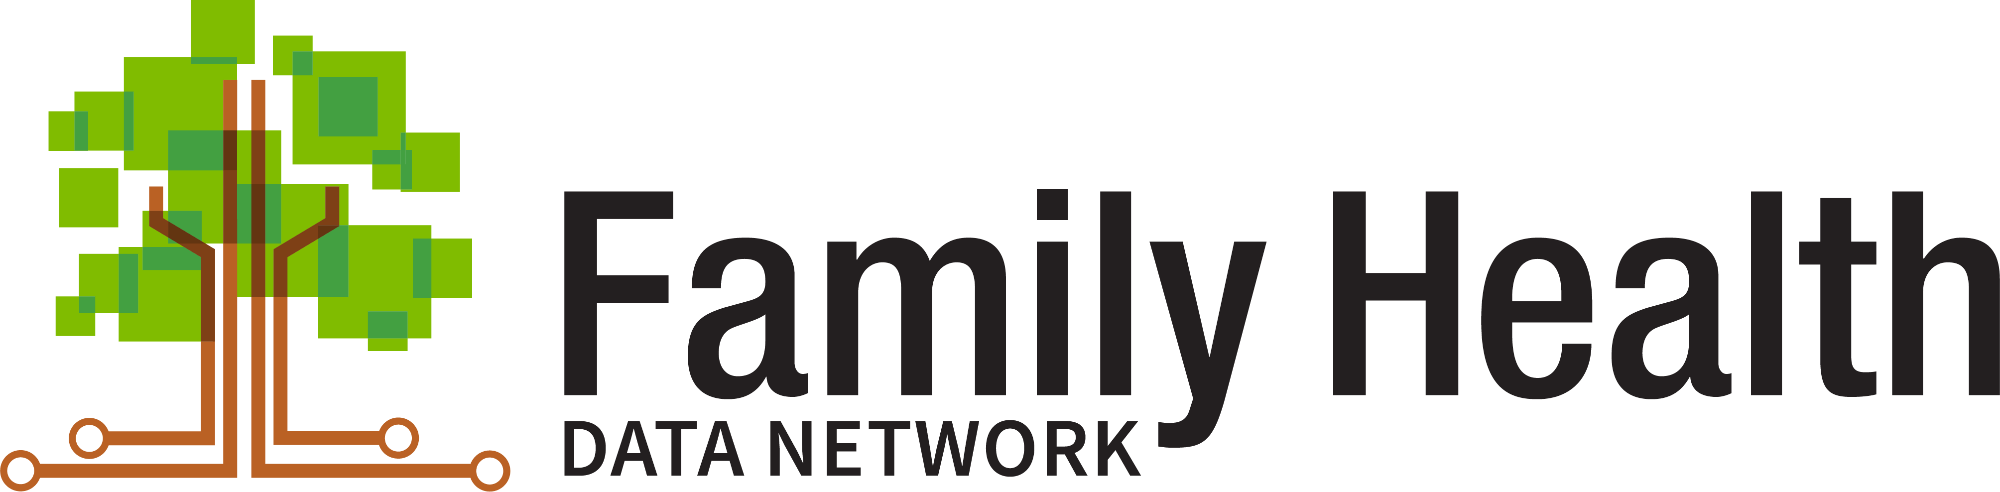 Family Health Data Network Logo